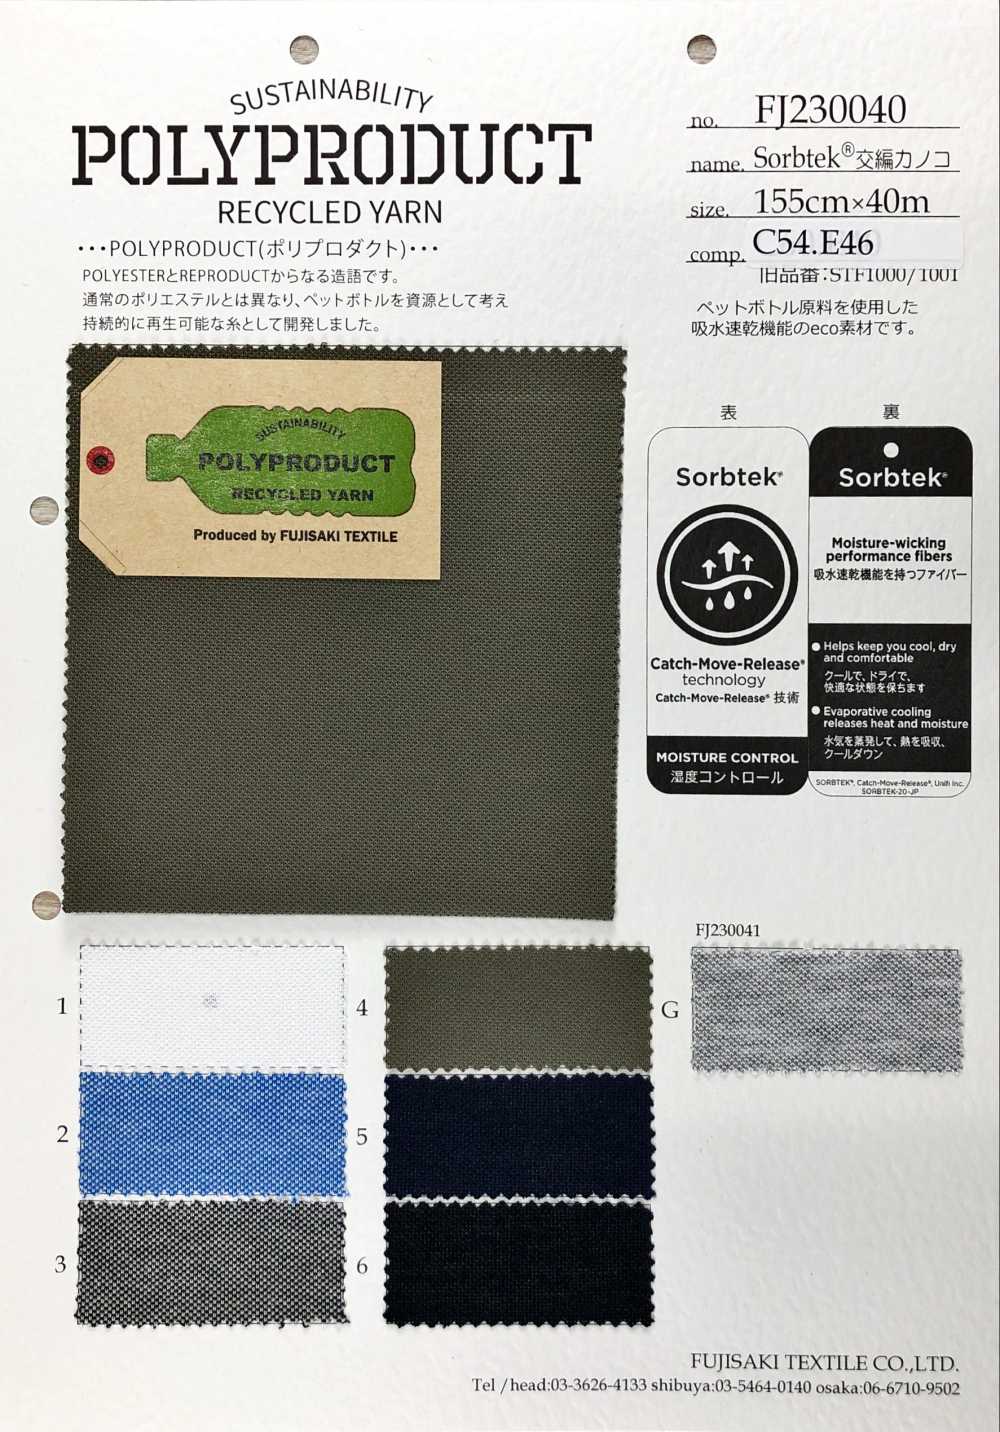 FJ230040 Puntada De Arroz Entrelazada Sorbtek[Fabrica Textil] Fujisaki Textile